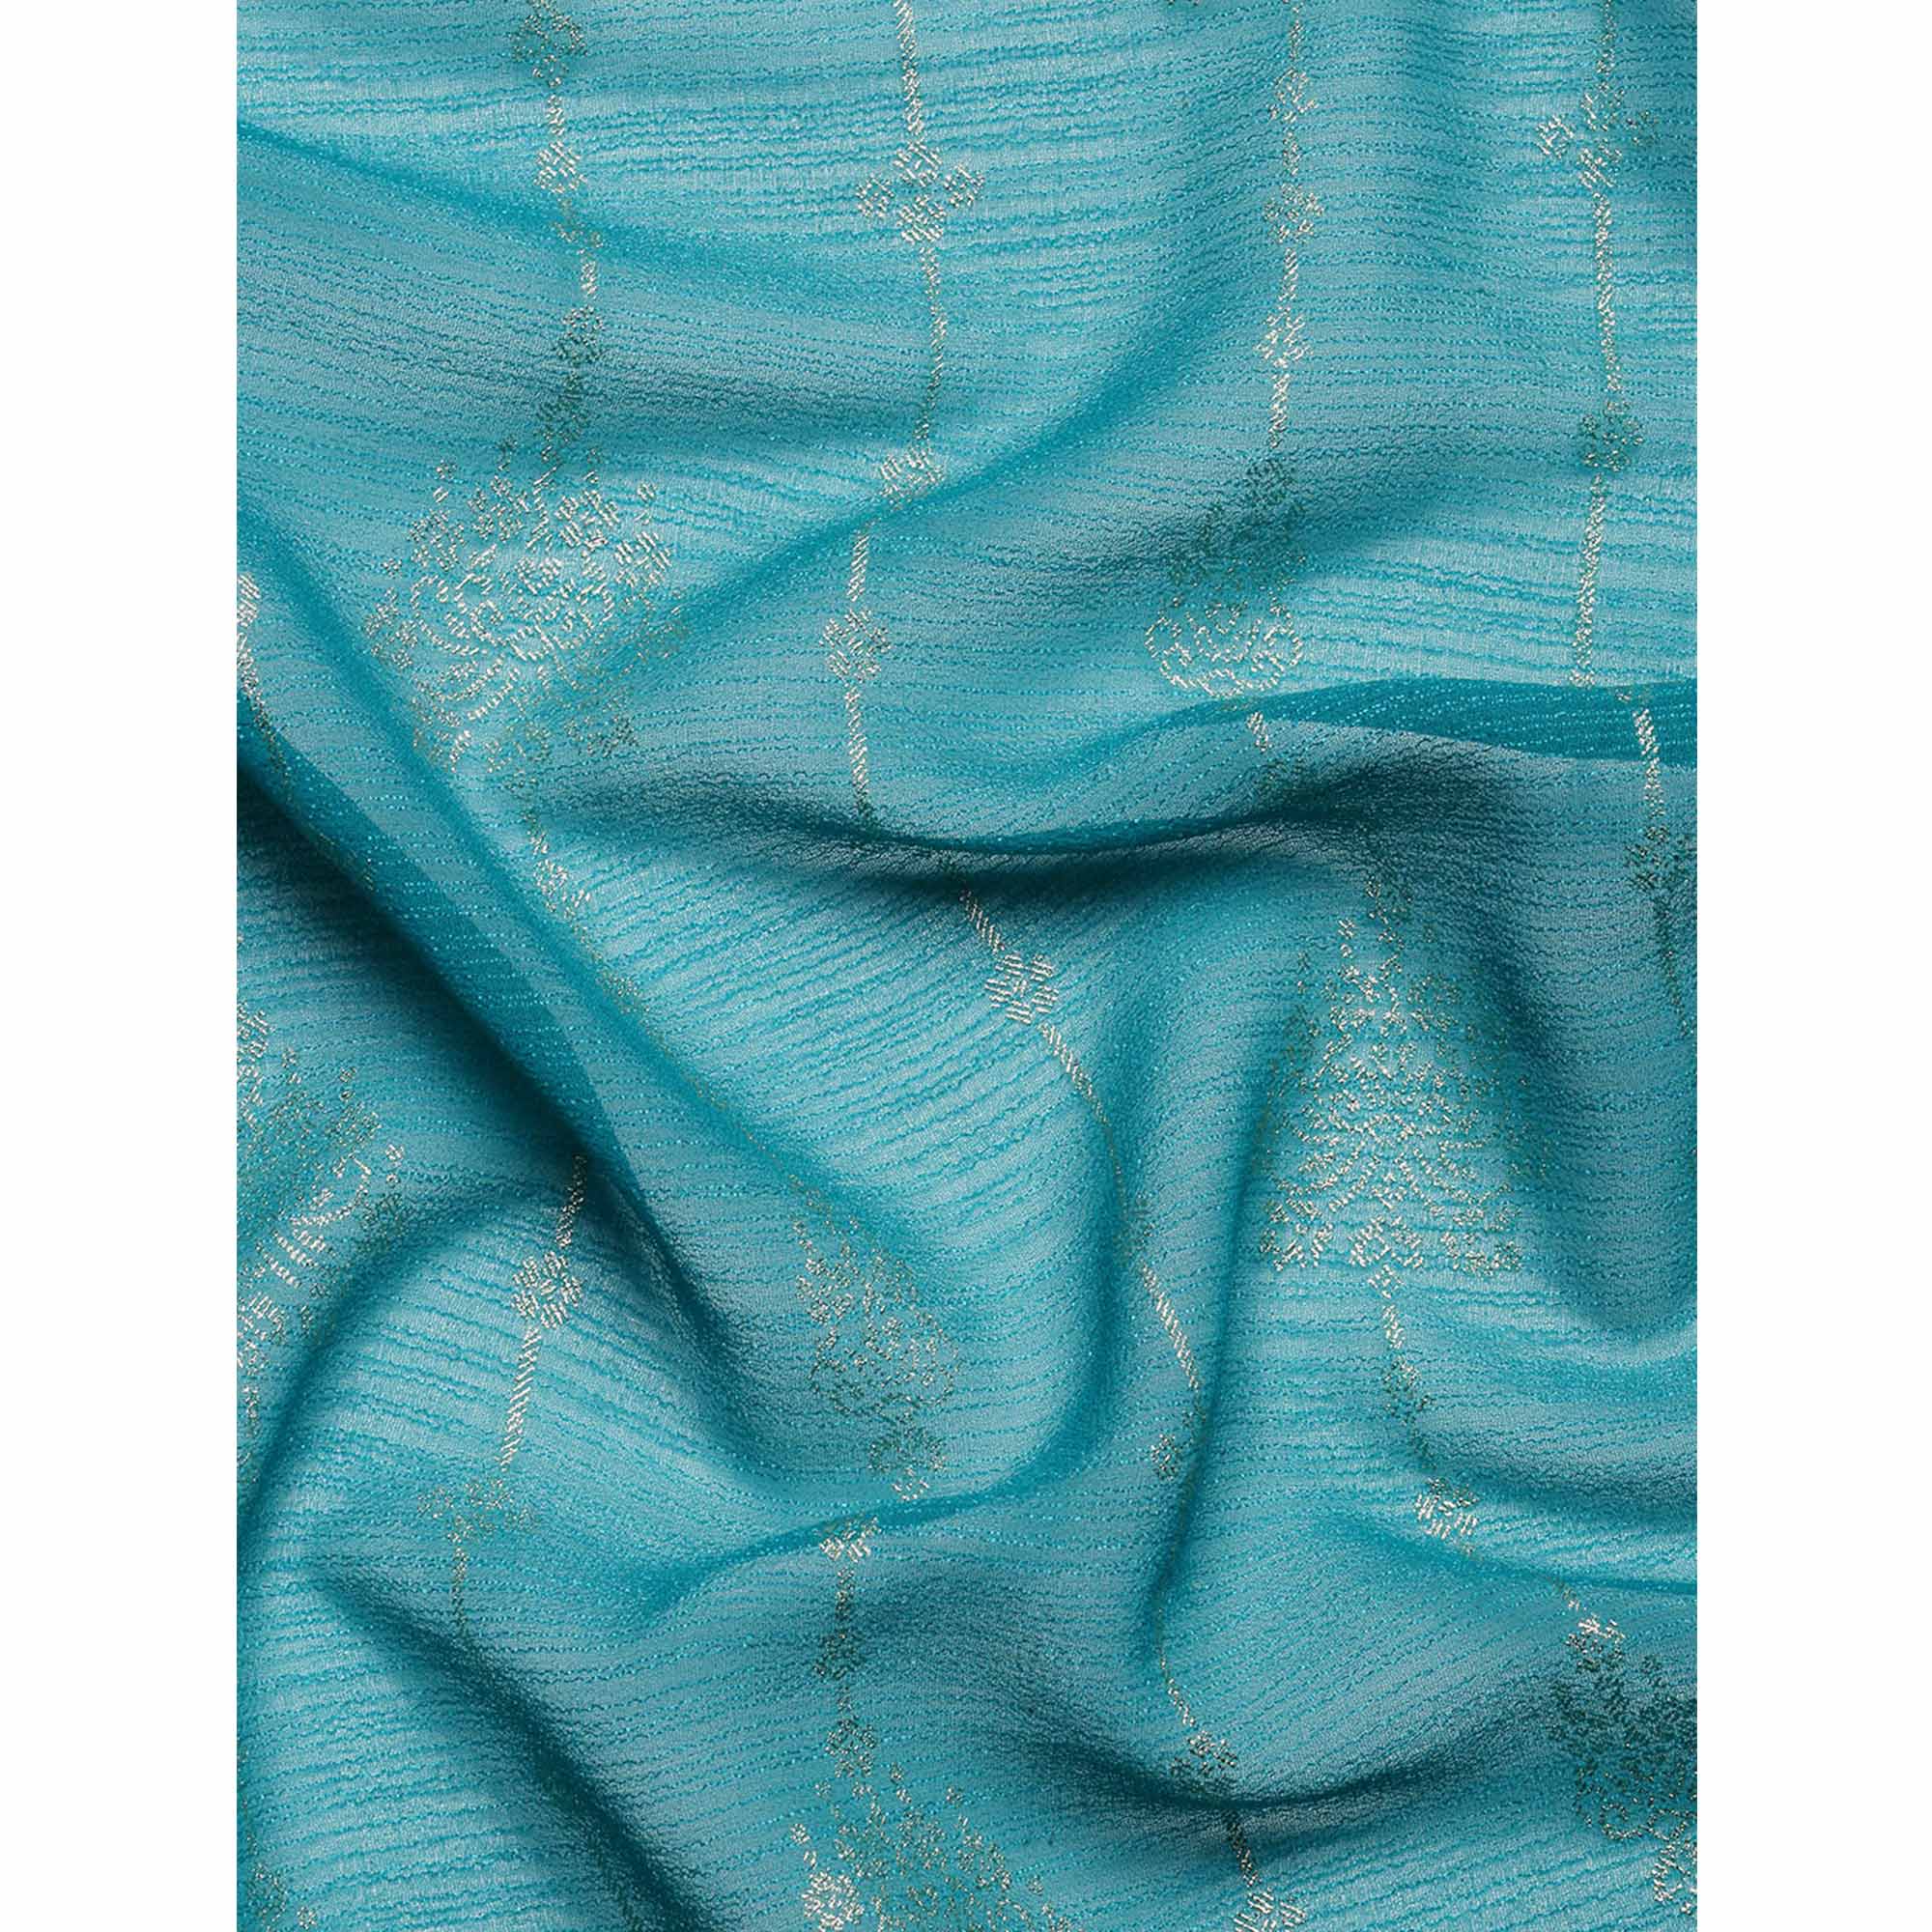 Blue Foil Printed With Fancy Border Zomato Silk Saree